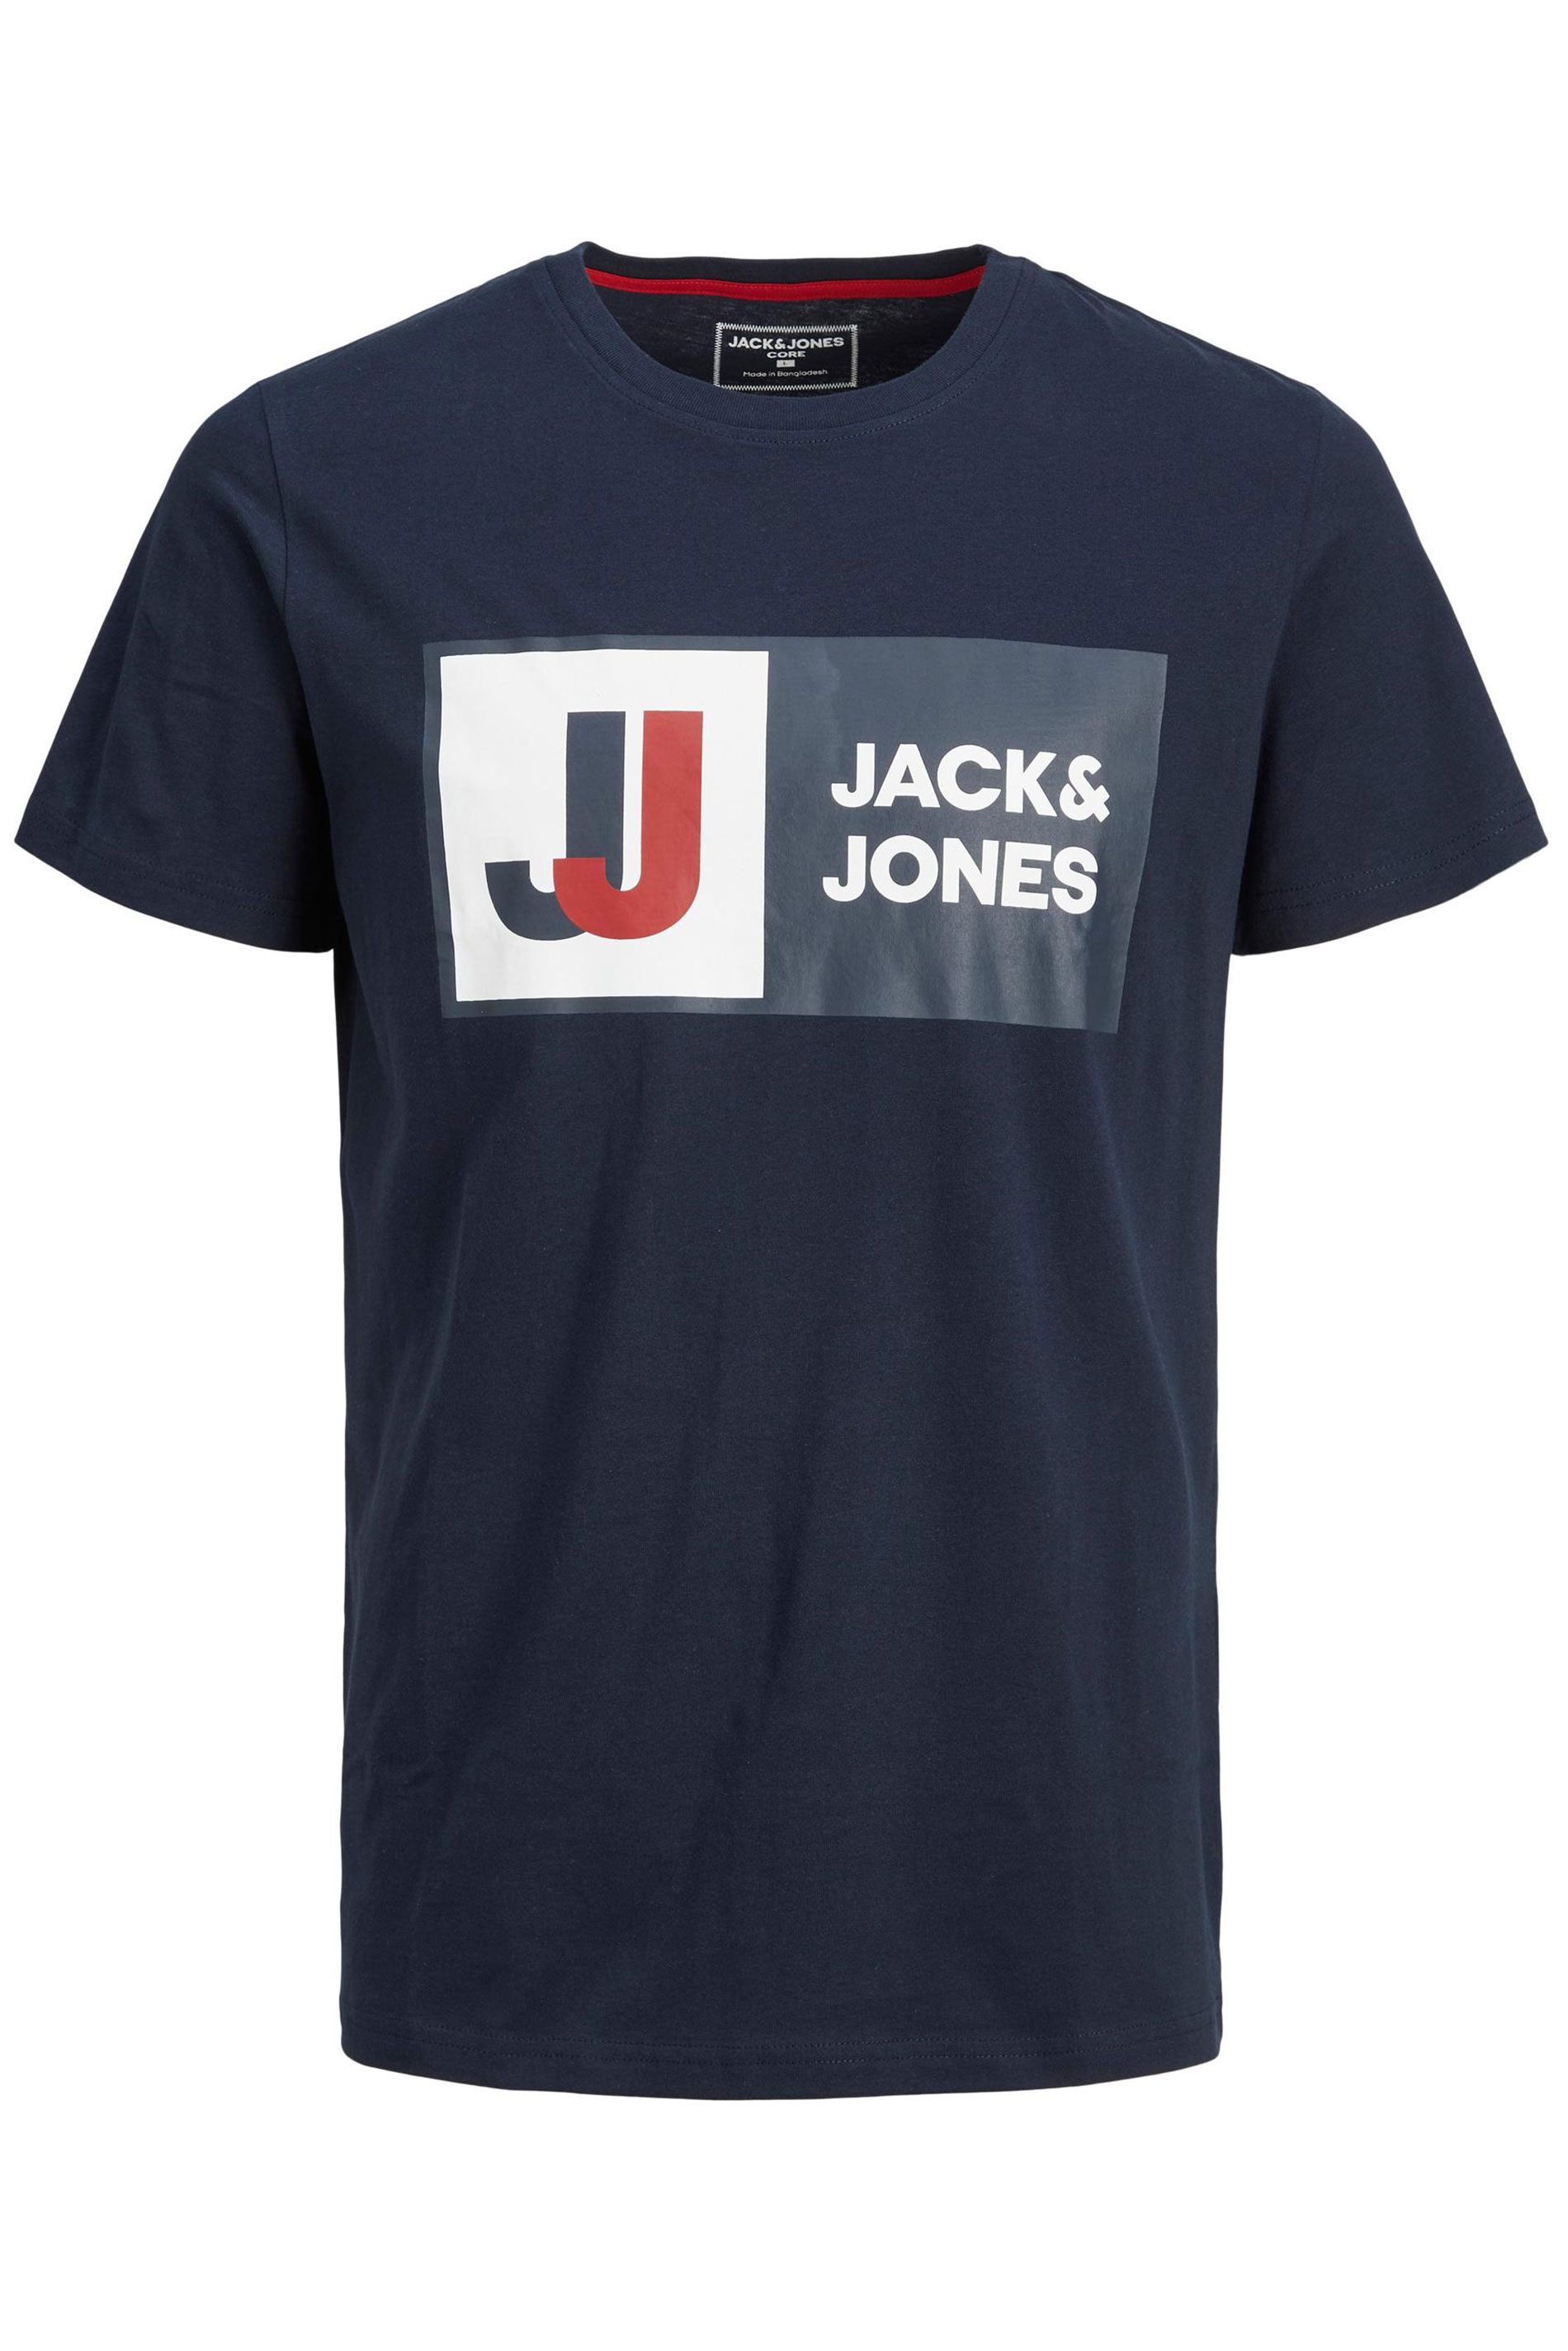 JACK & JONES Big & Tall Navy Blue Logo T-Shirt | BadRhino 2